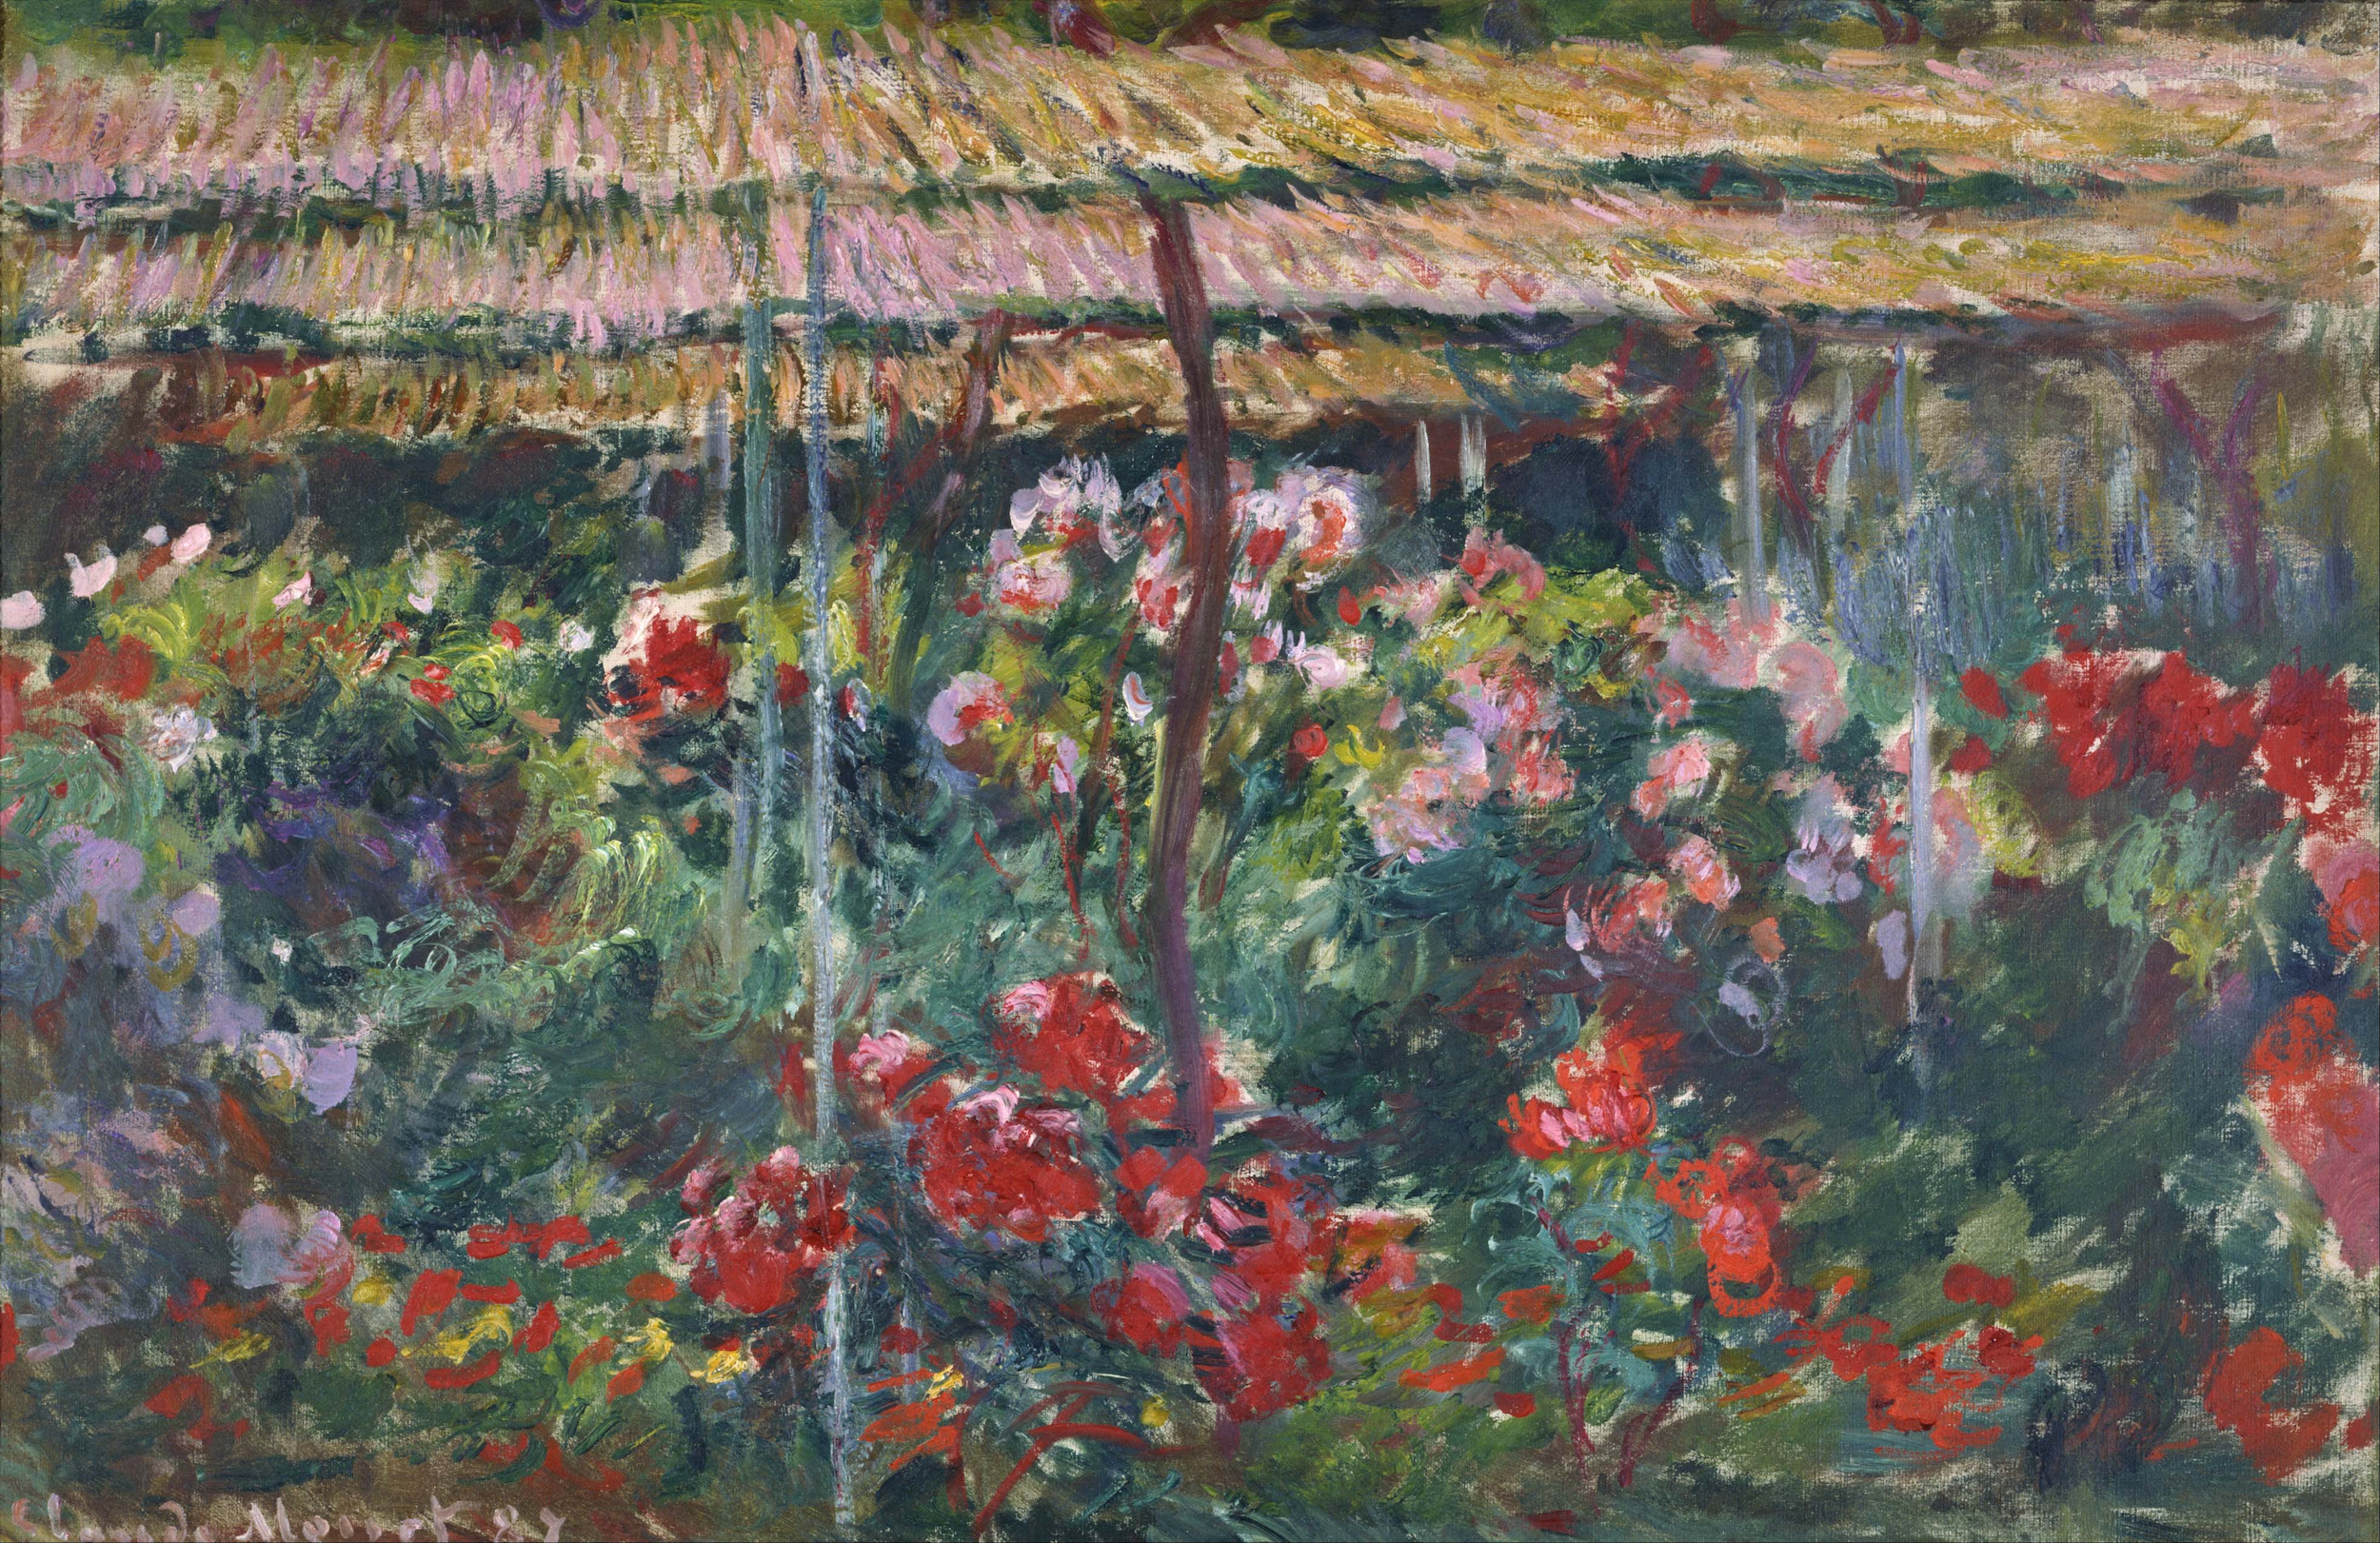 Peoniowy ogród by Claude Monet - 1887 - 100 x 65.3 cm 